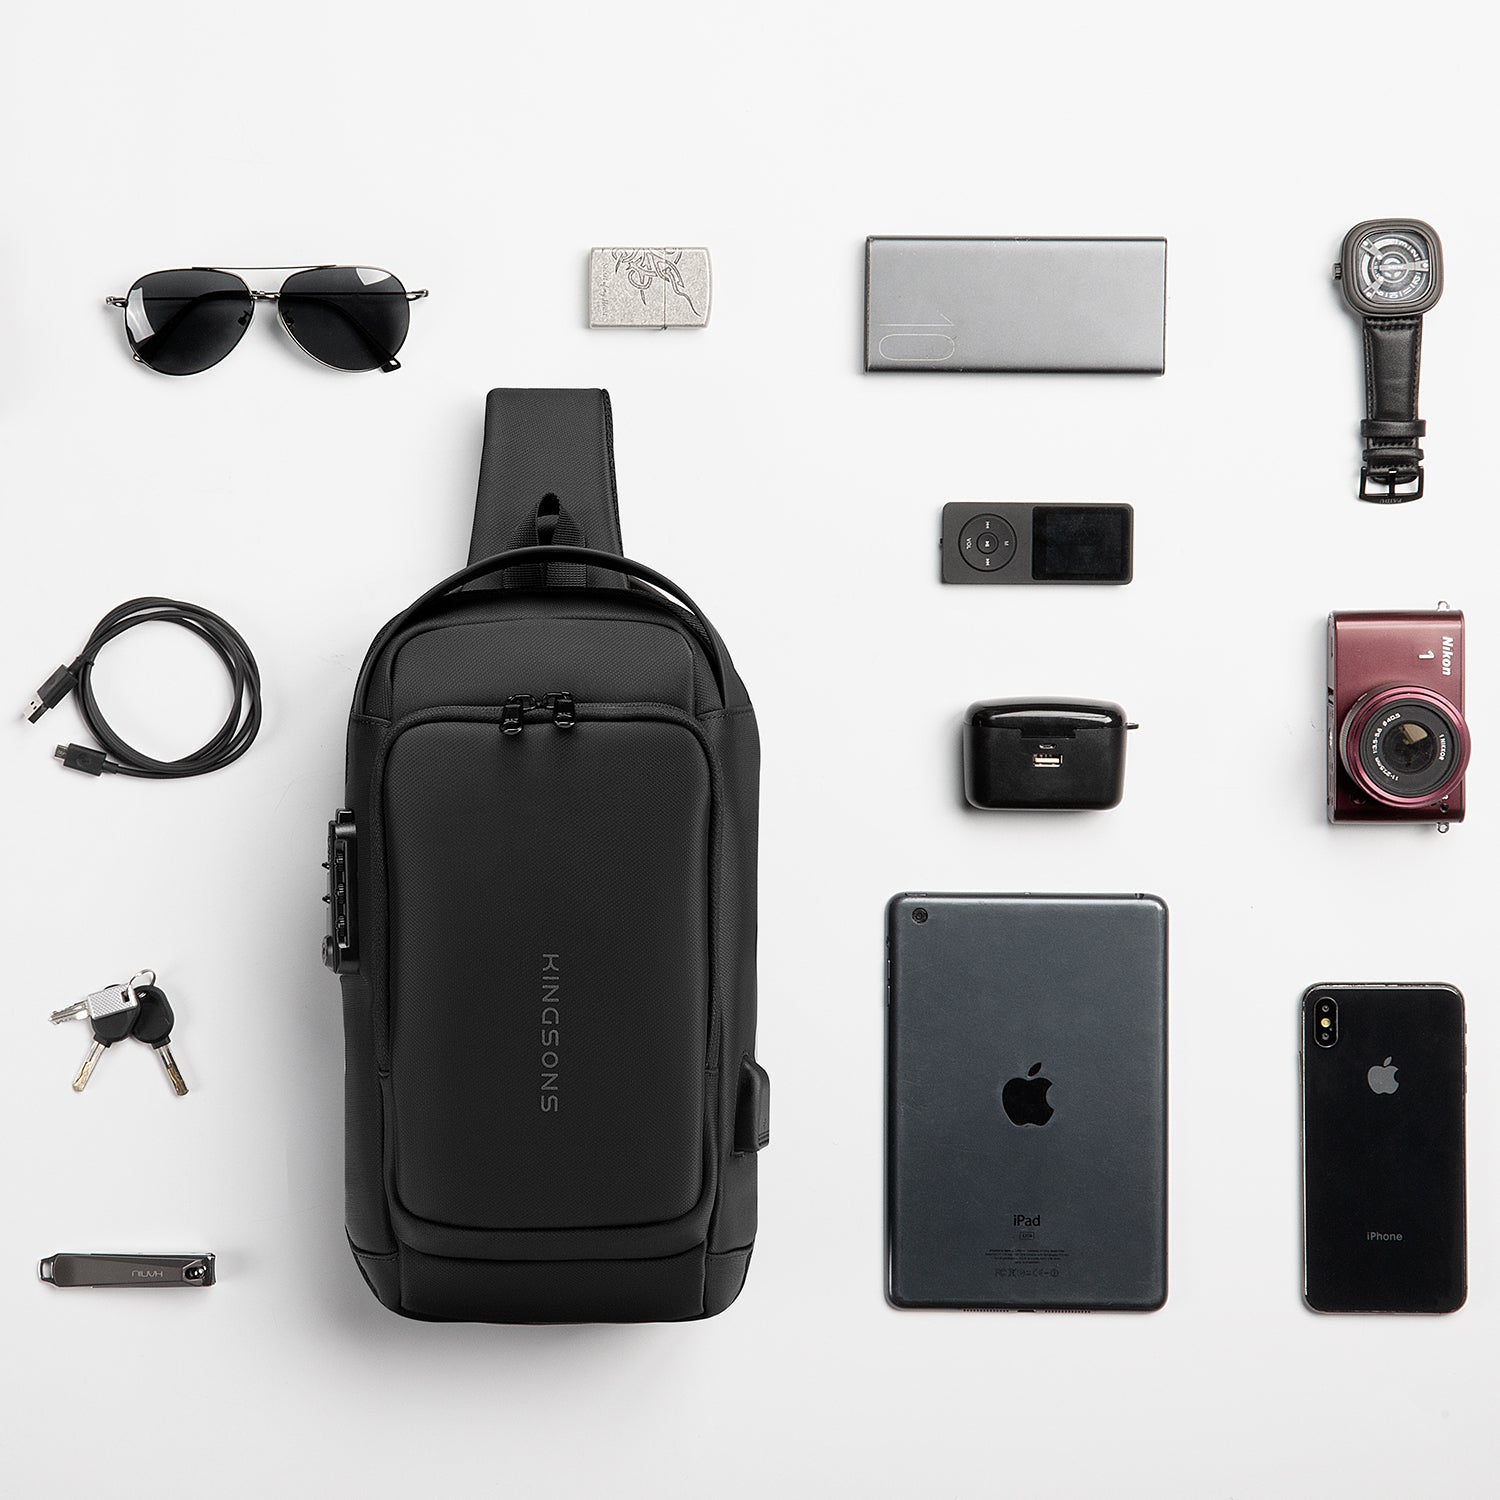 Kingsons Sling Bag For Travel Hiking Daypack With TSA Lock USB Port